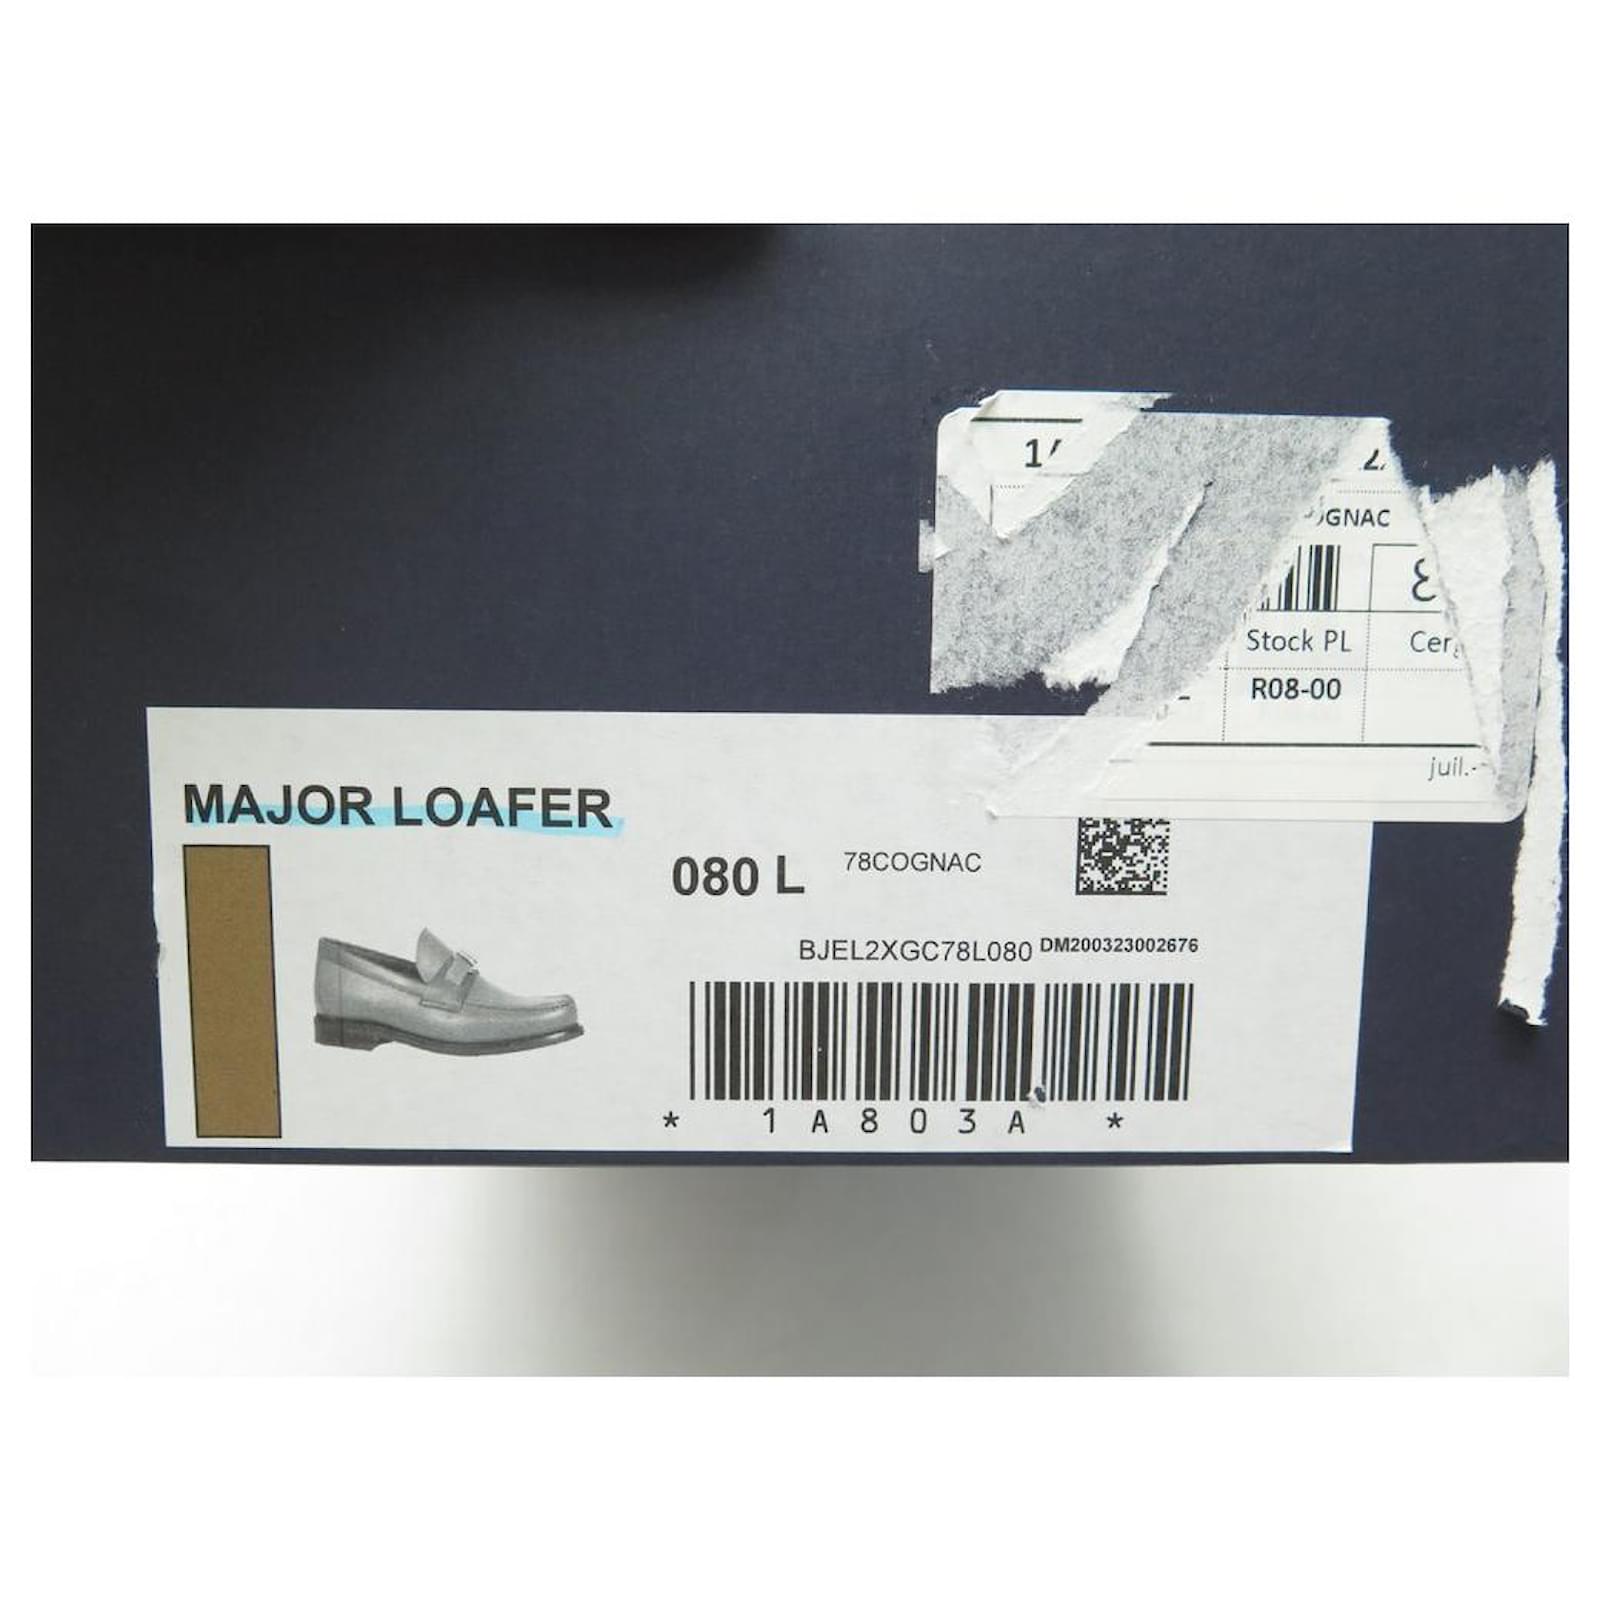 Louis Vuitton Major Loafer Mocha. Size 08.0